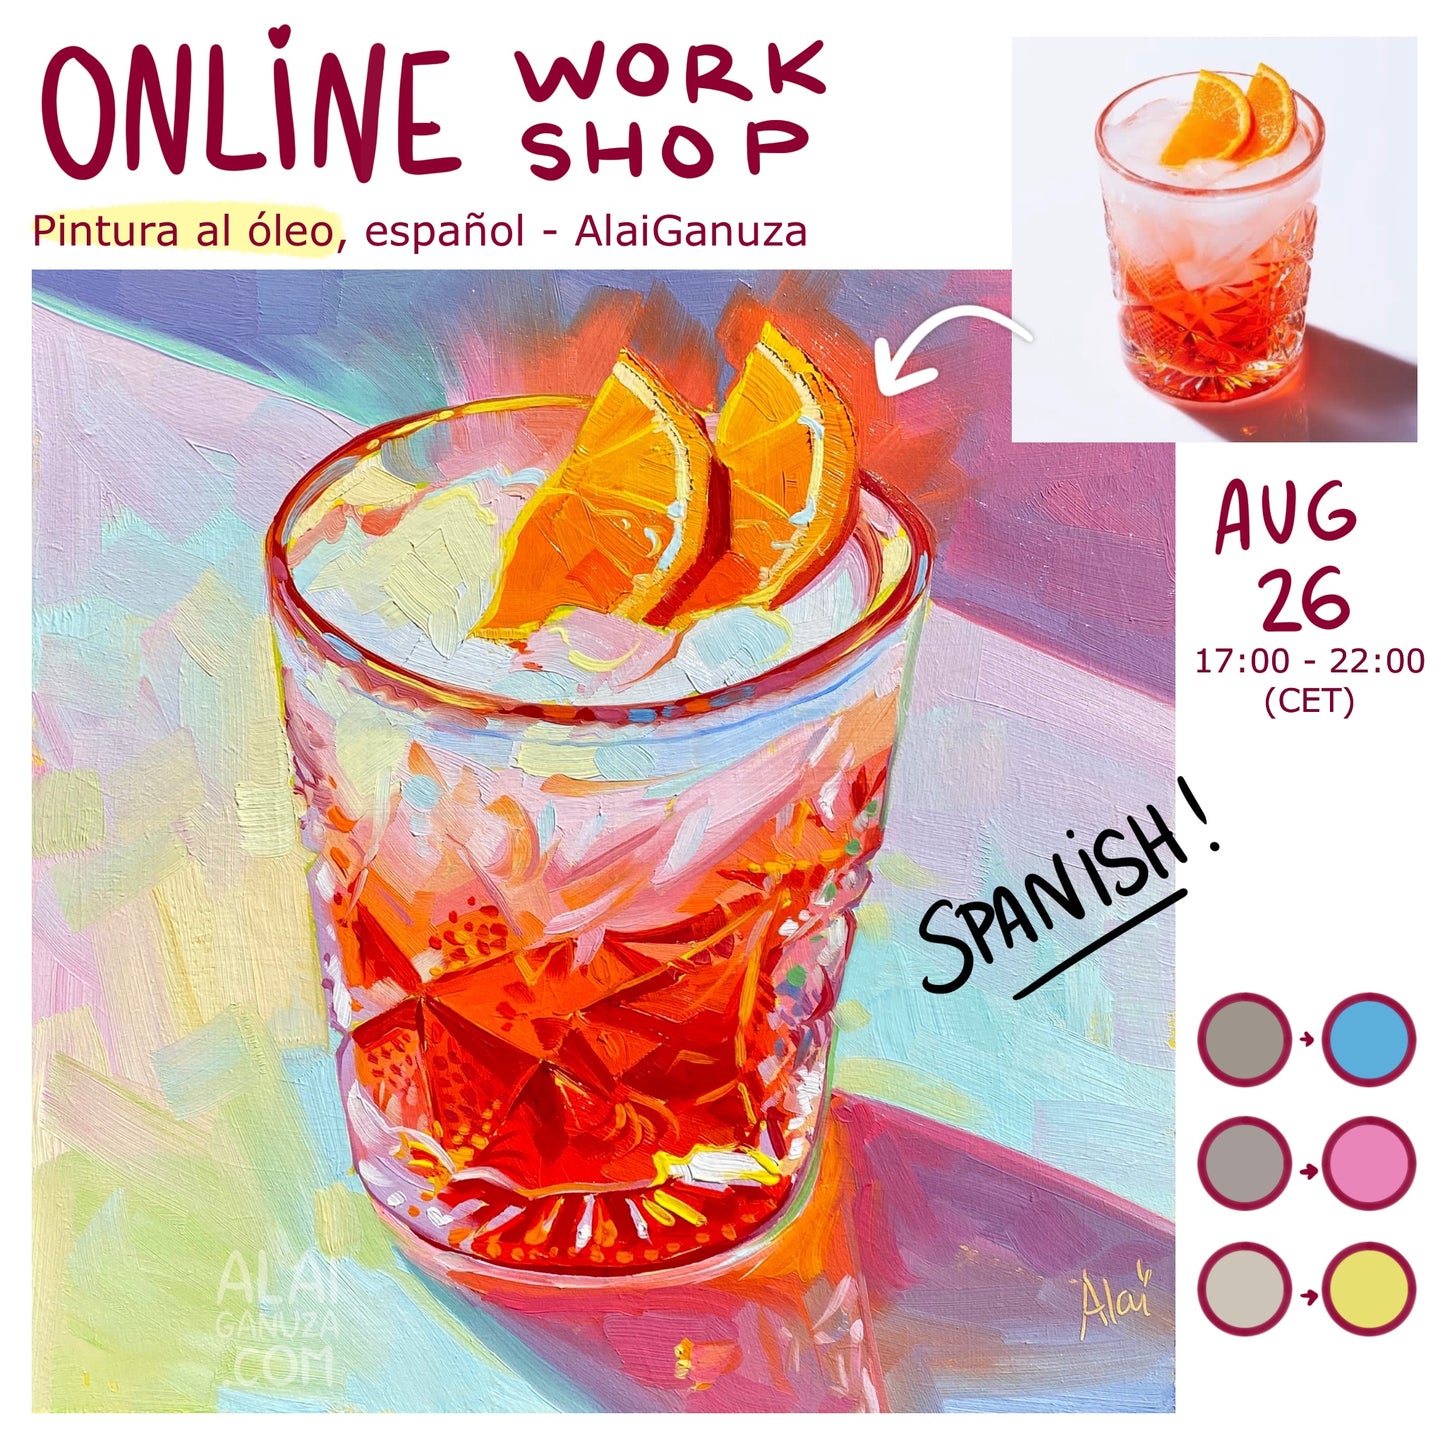 Spanish Online workshop - Pintura al óleo - Aug 26